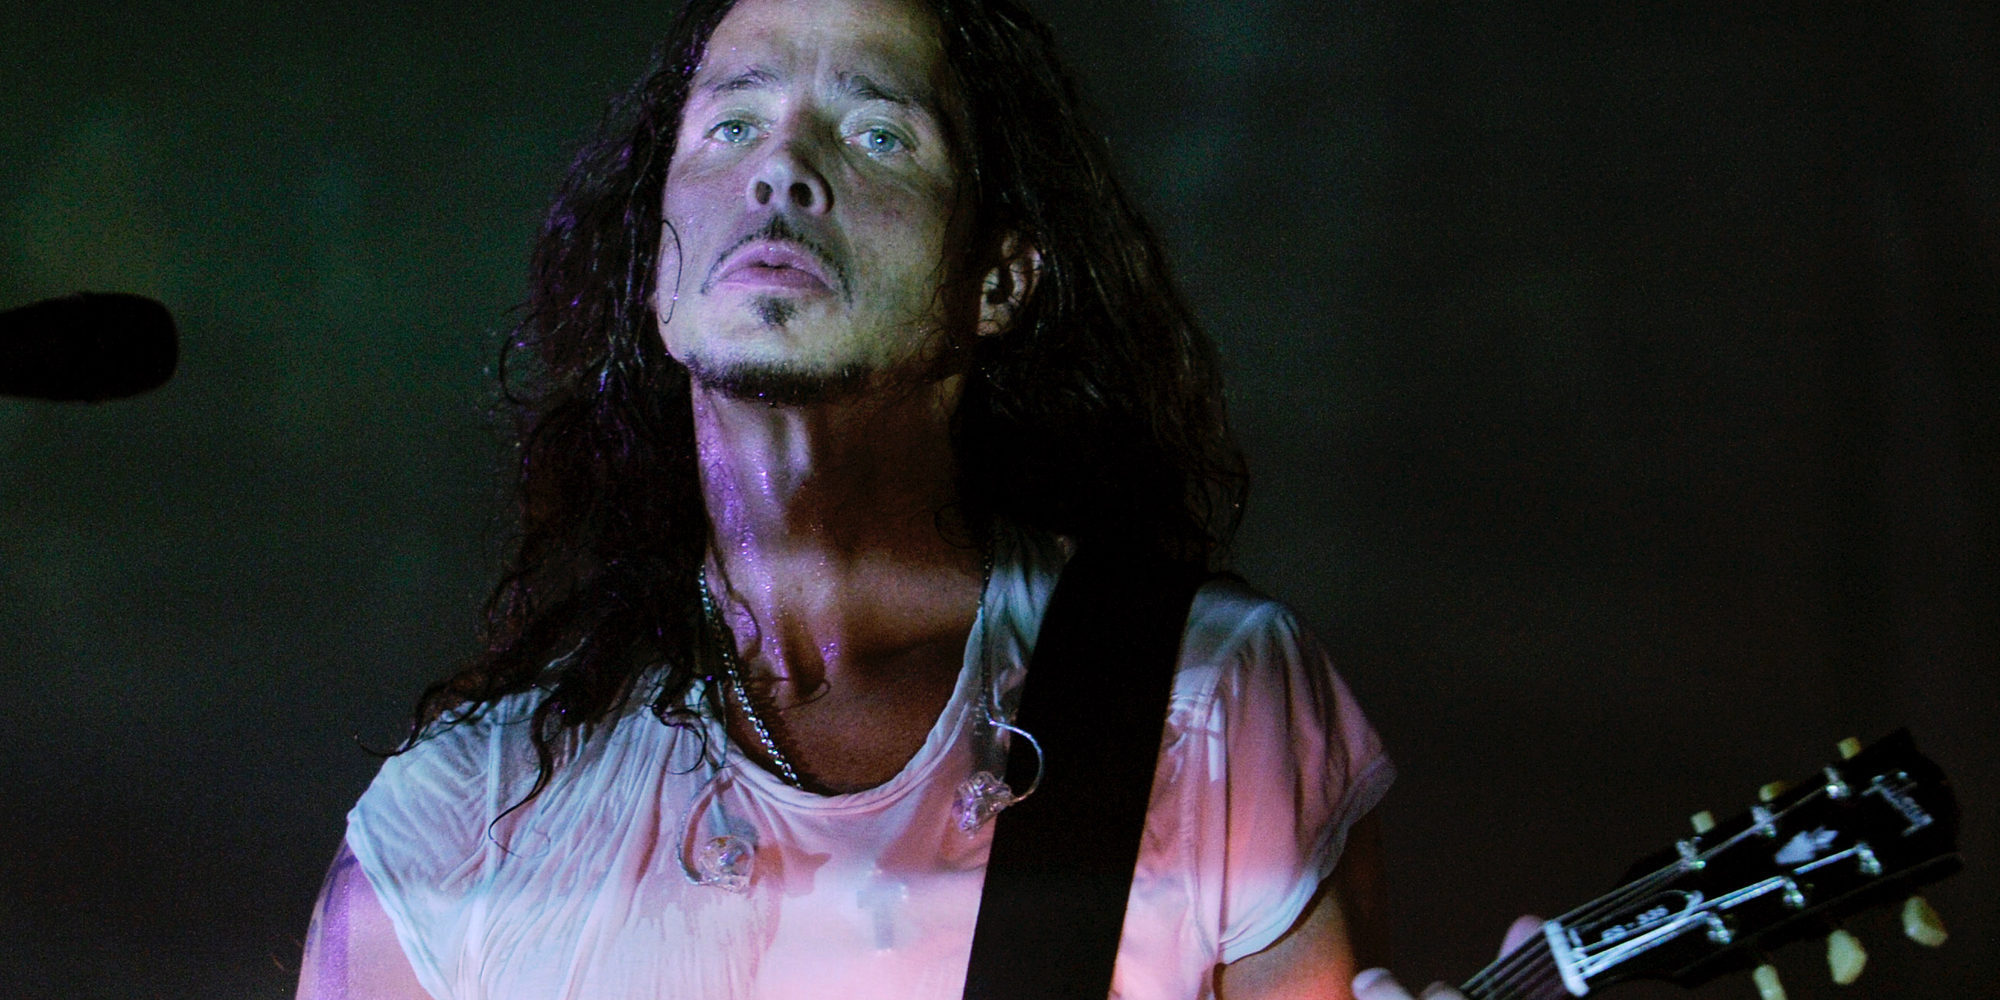 Sale a la luz la causa de la muerte de Chris Cornell, vocalista de Soundgarden y Audioslave